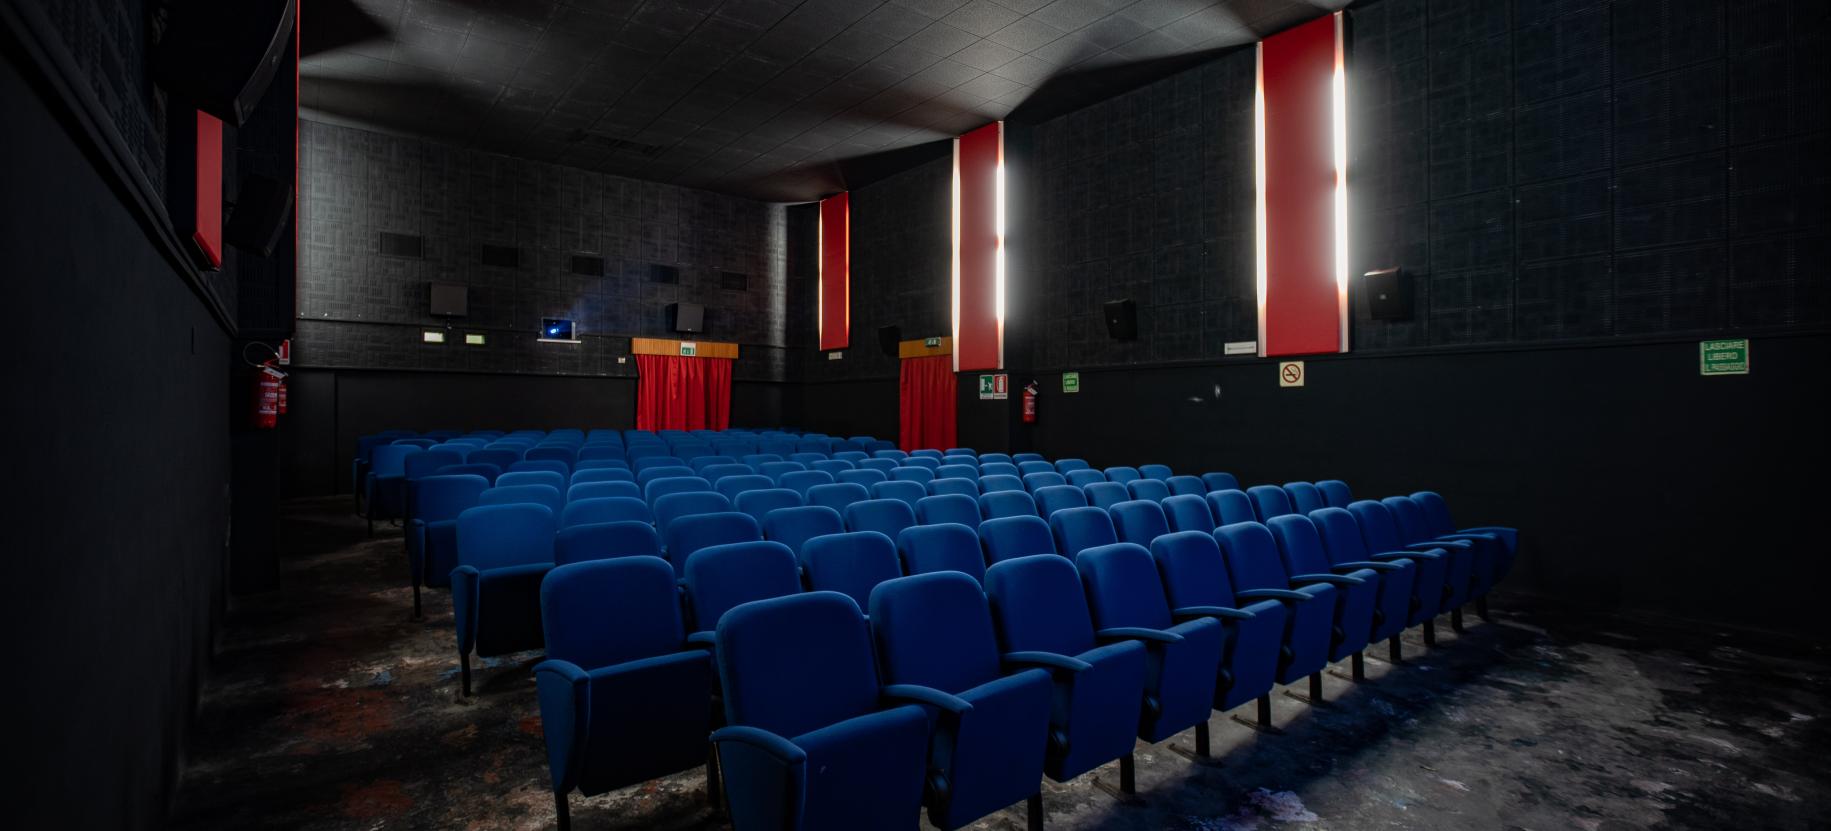 Cinema Sant'Anna